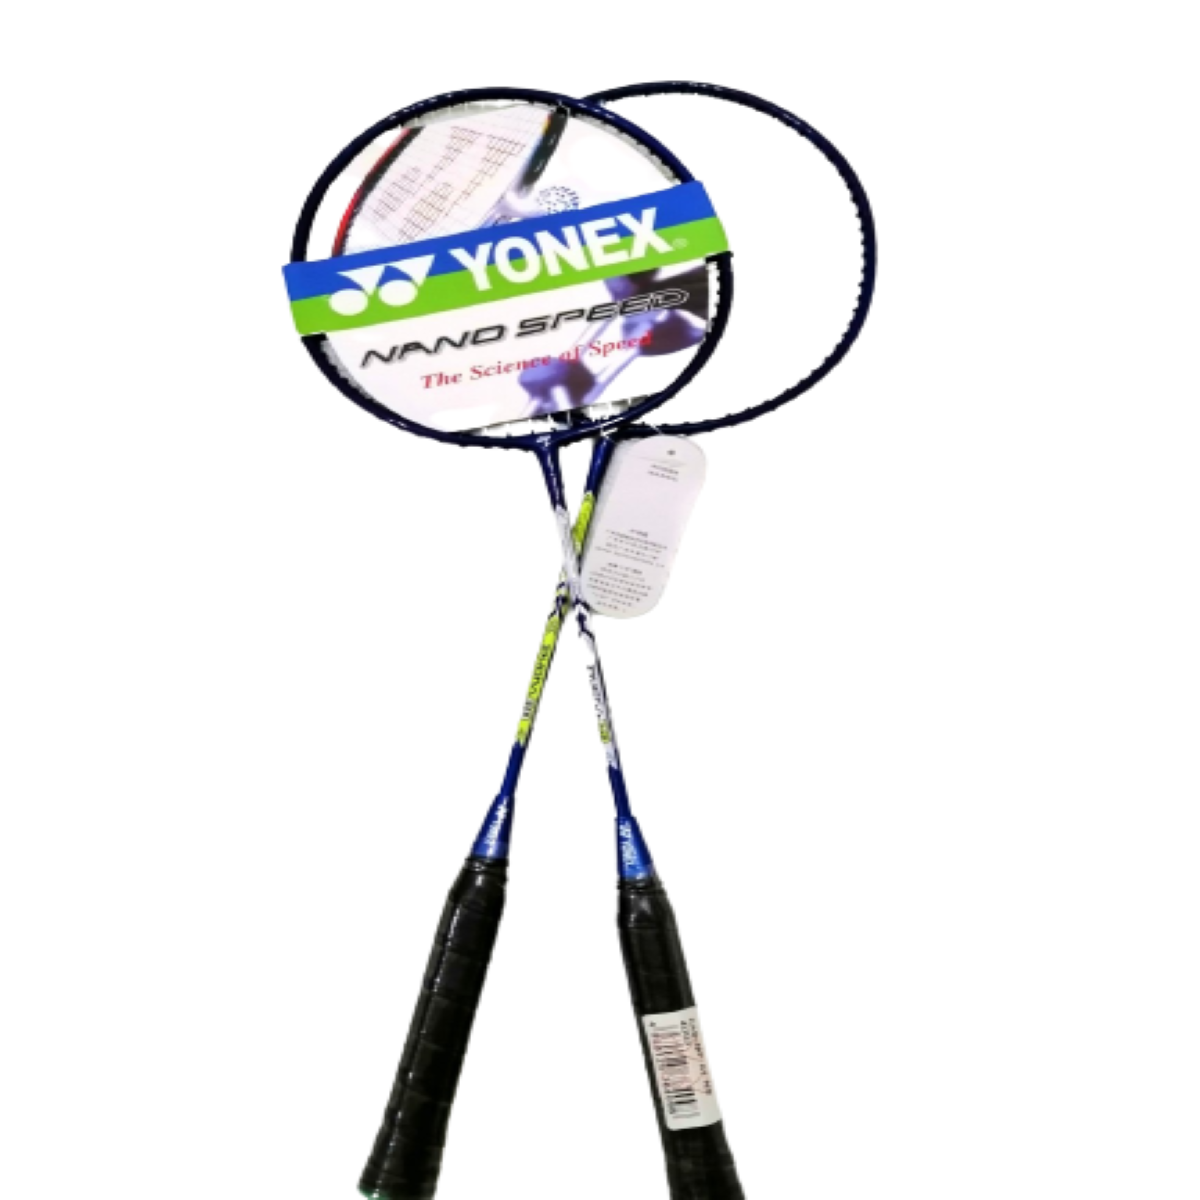 Xite Professional Badminton Racket With Cock Set Online